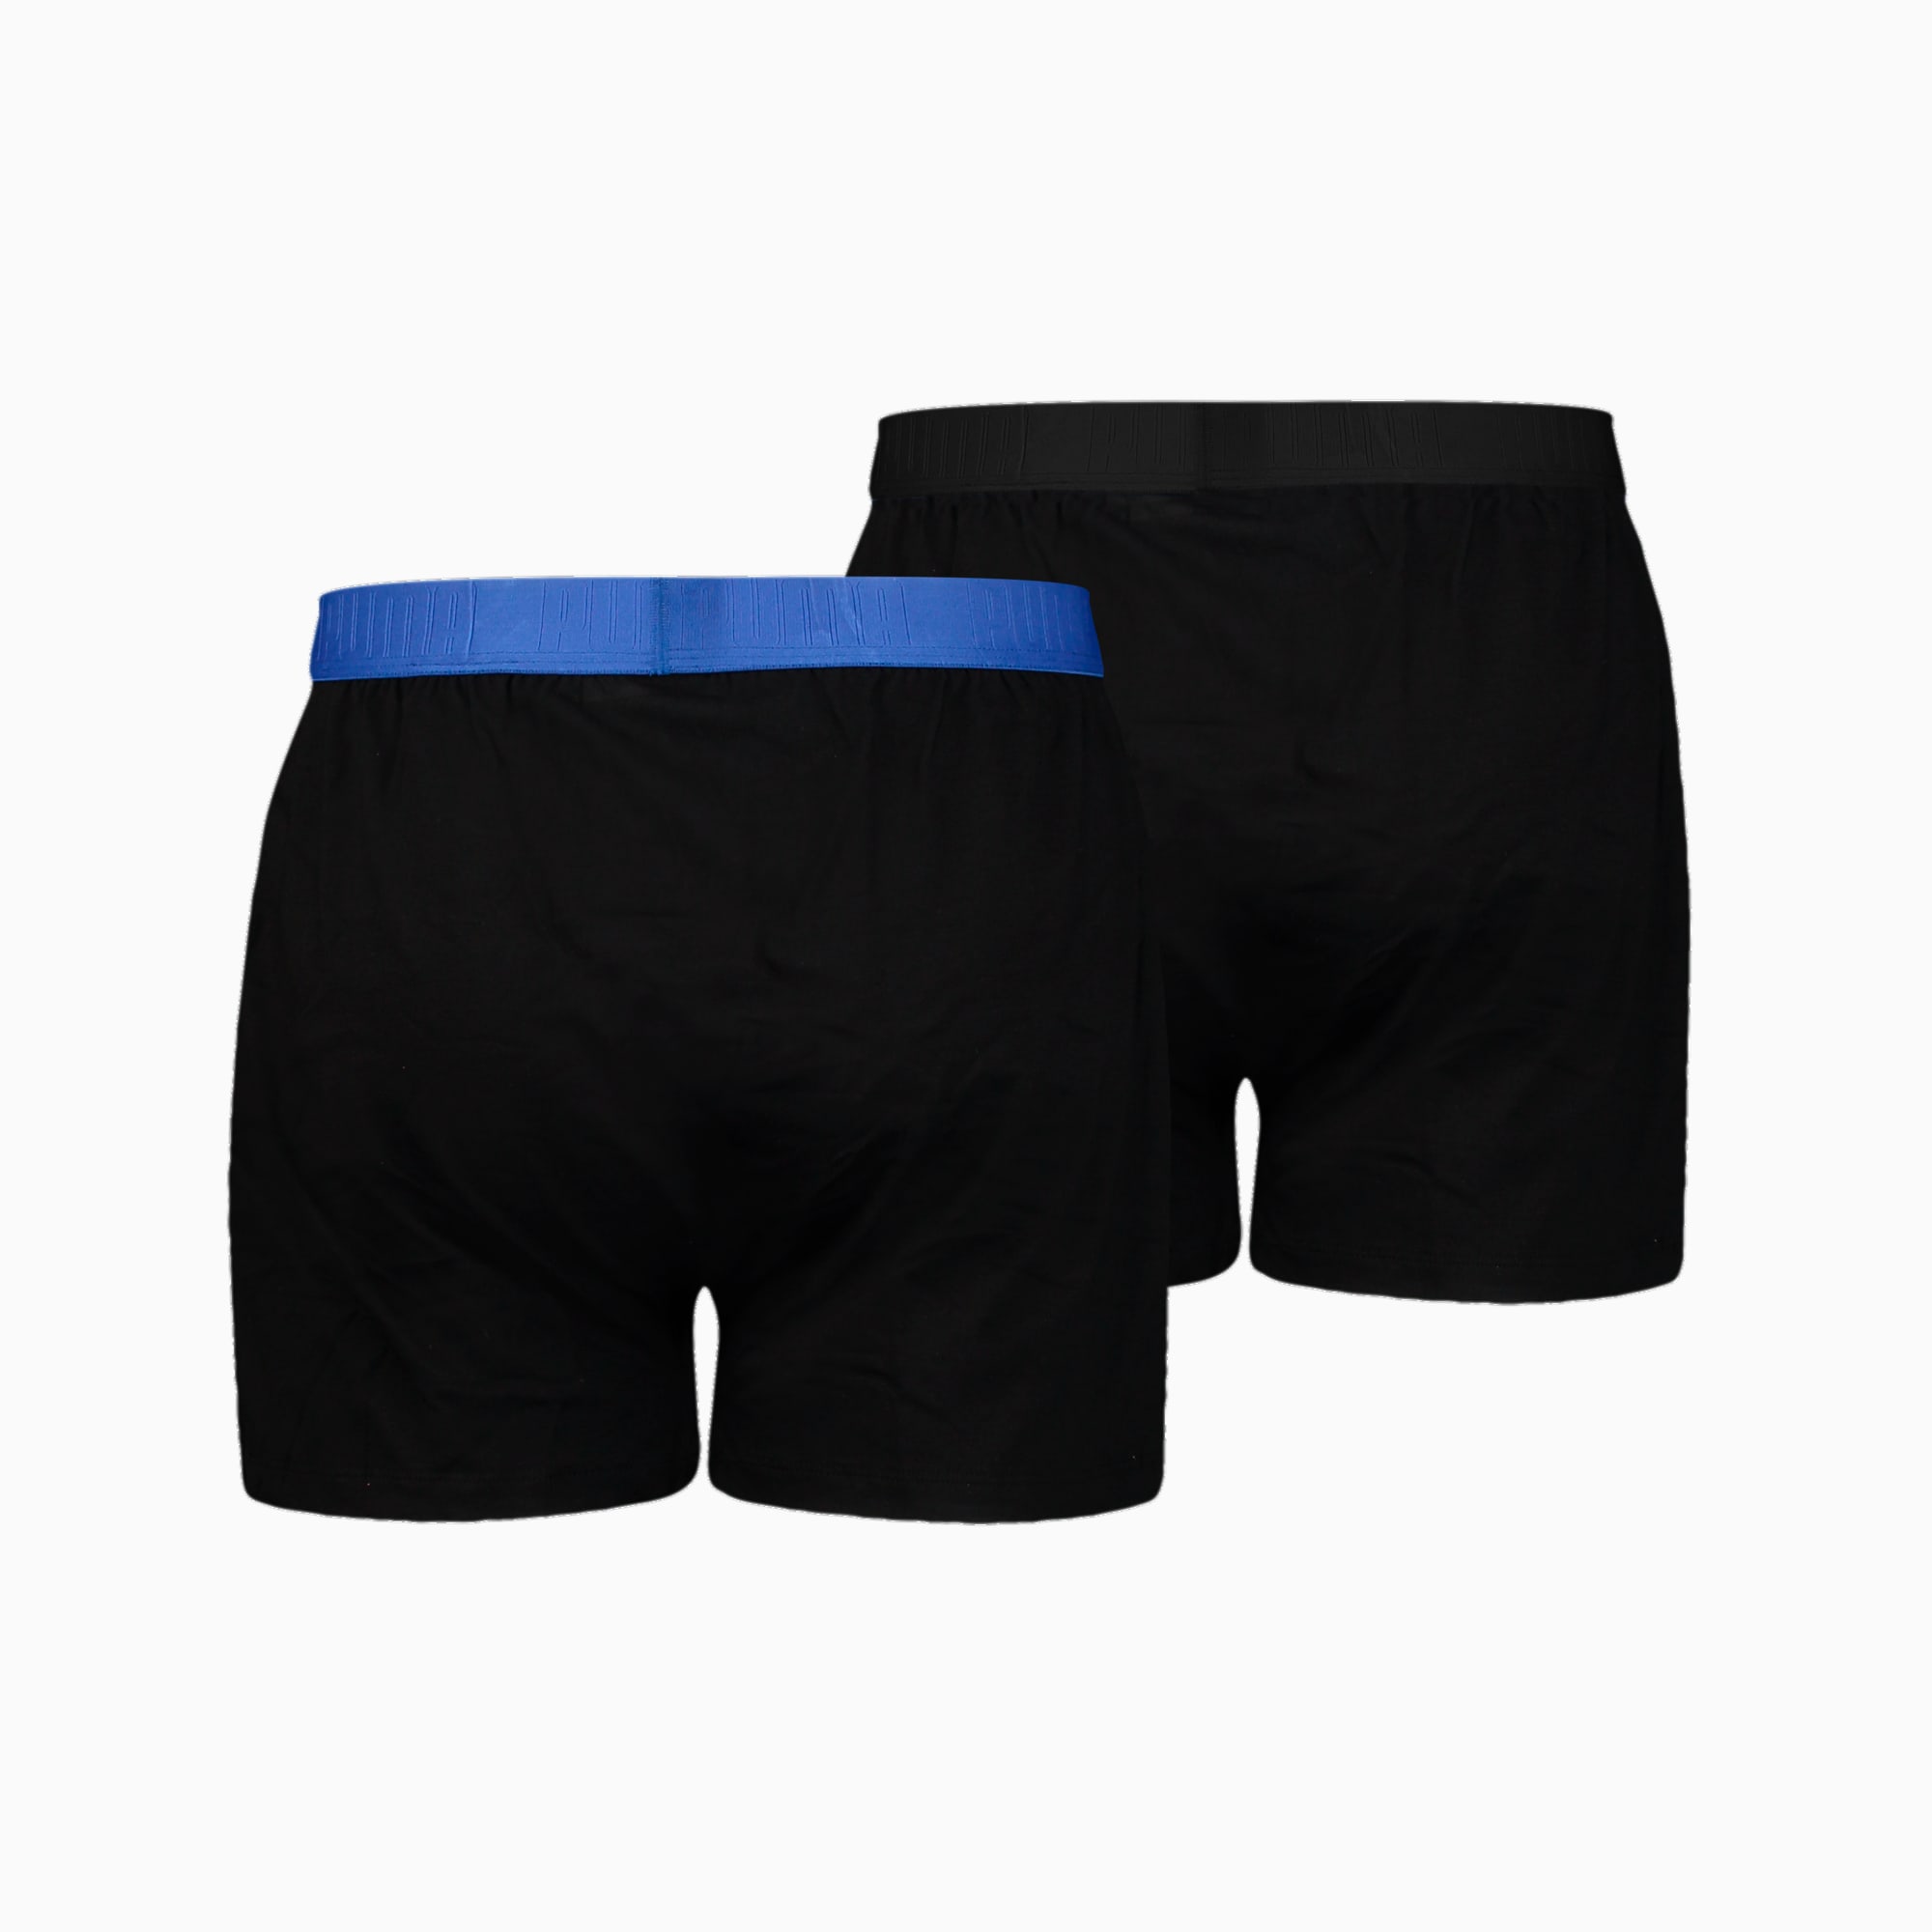 PUMA Ruimvallende Boxershorts, Blauw/Zwart